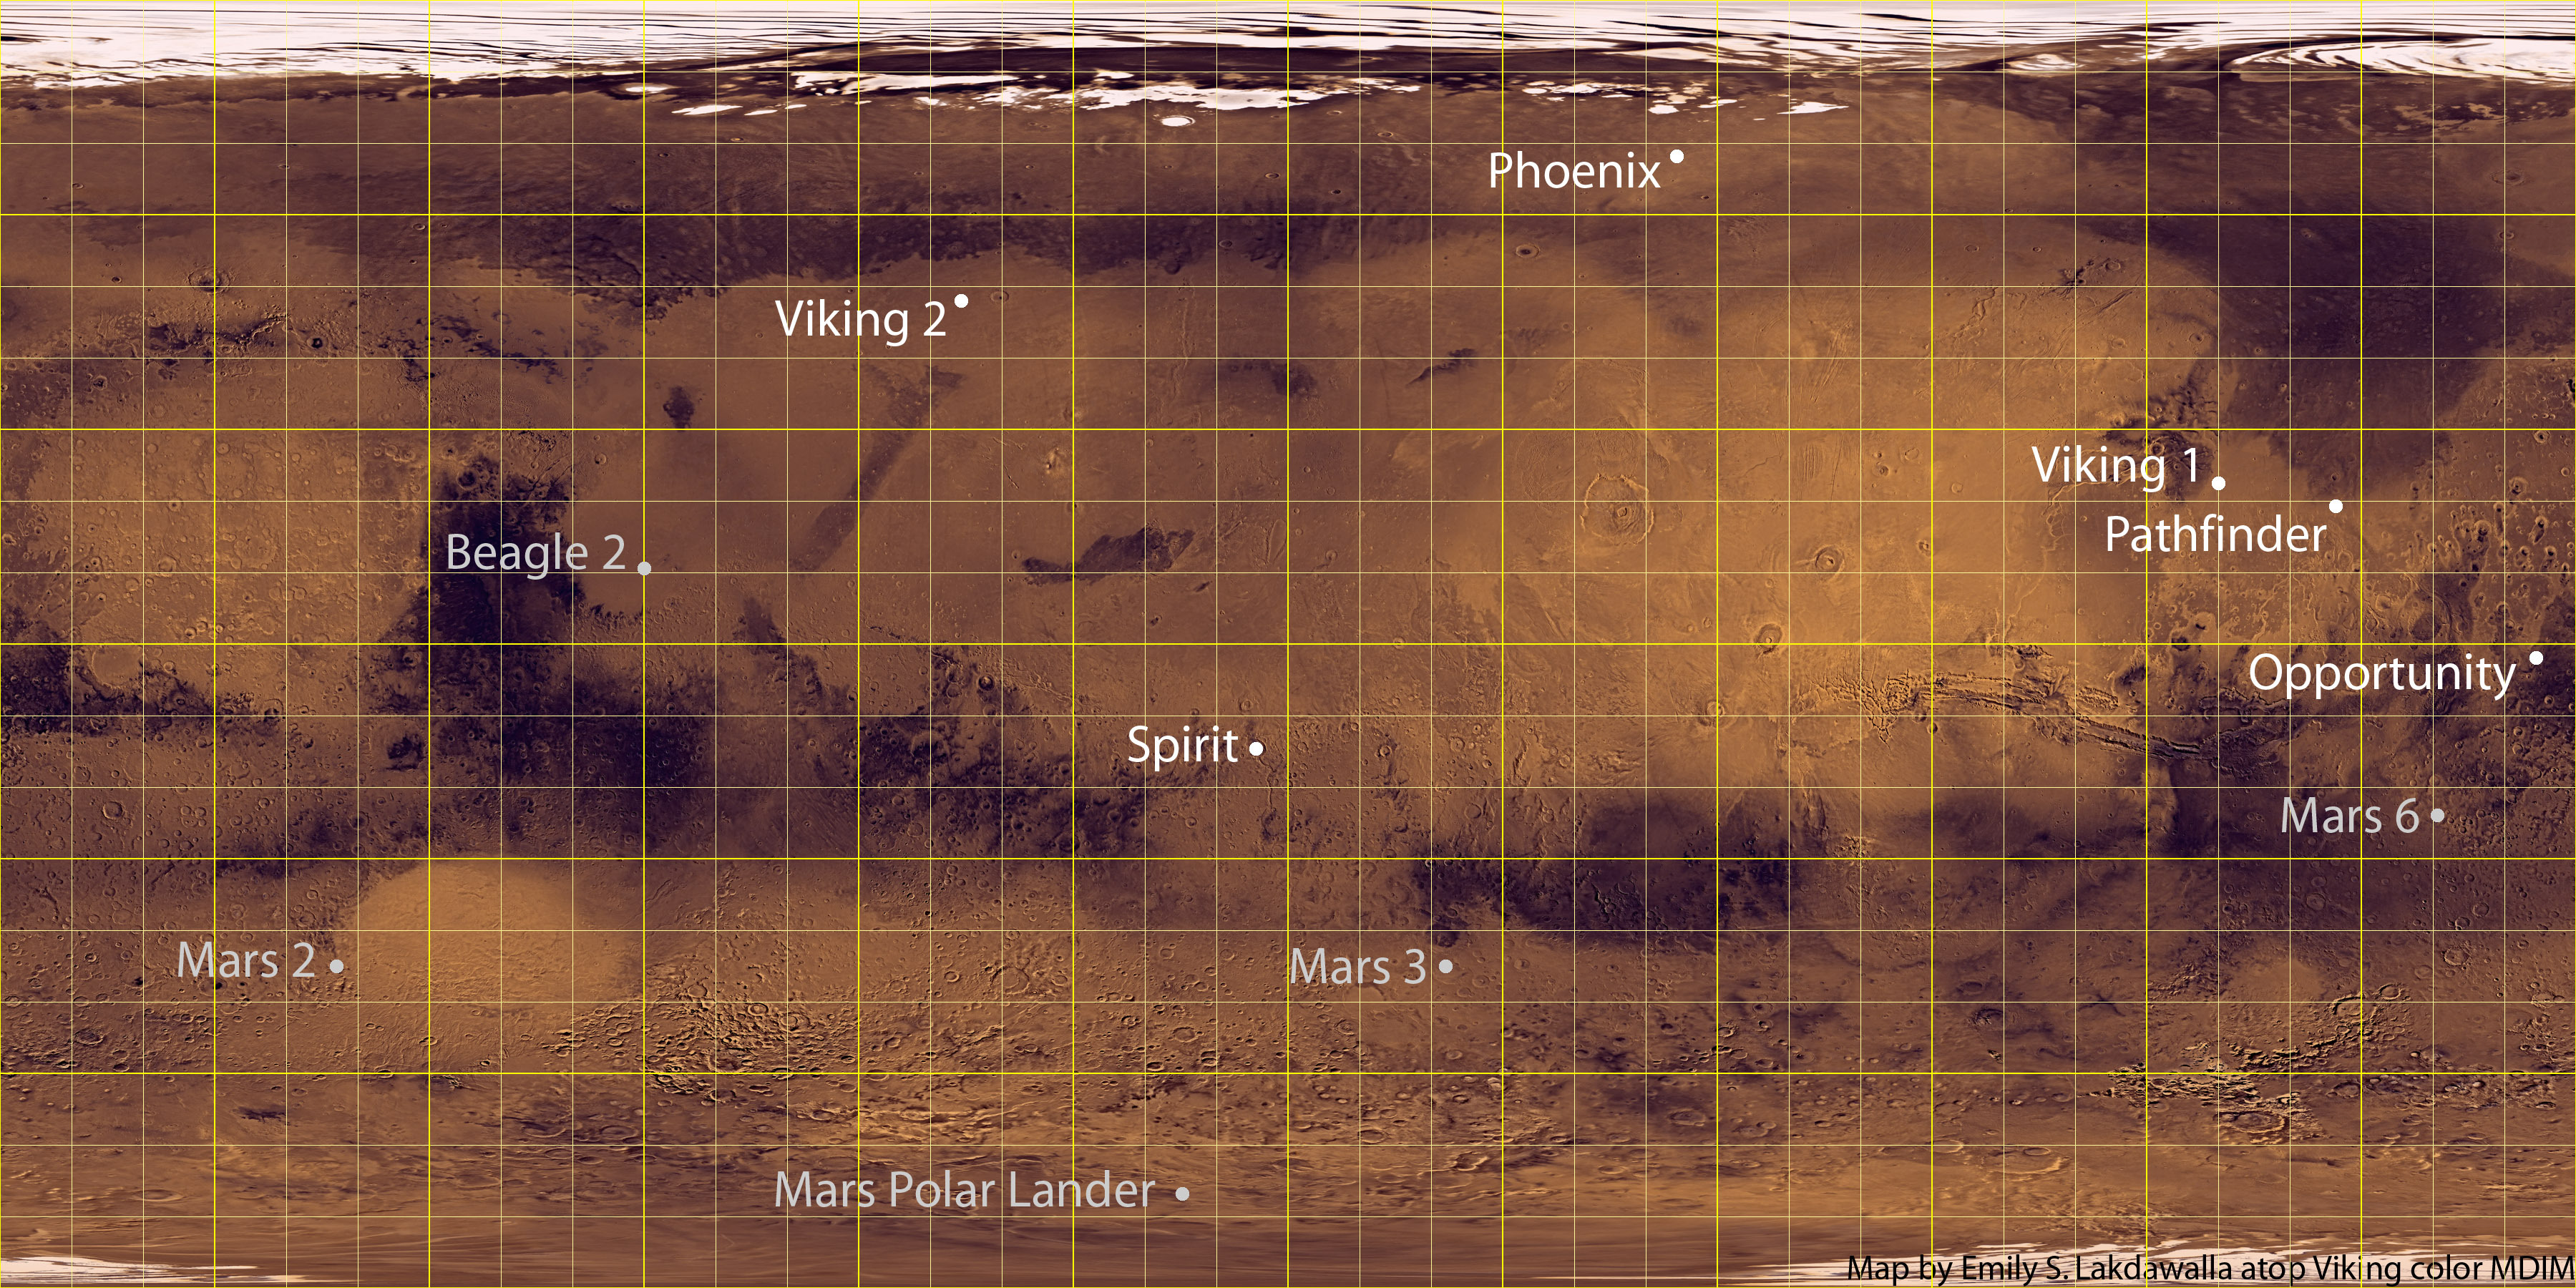 nasa mars landings map